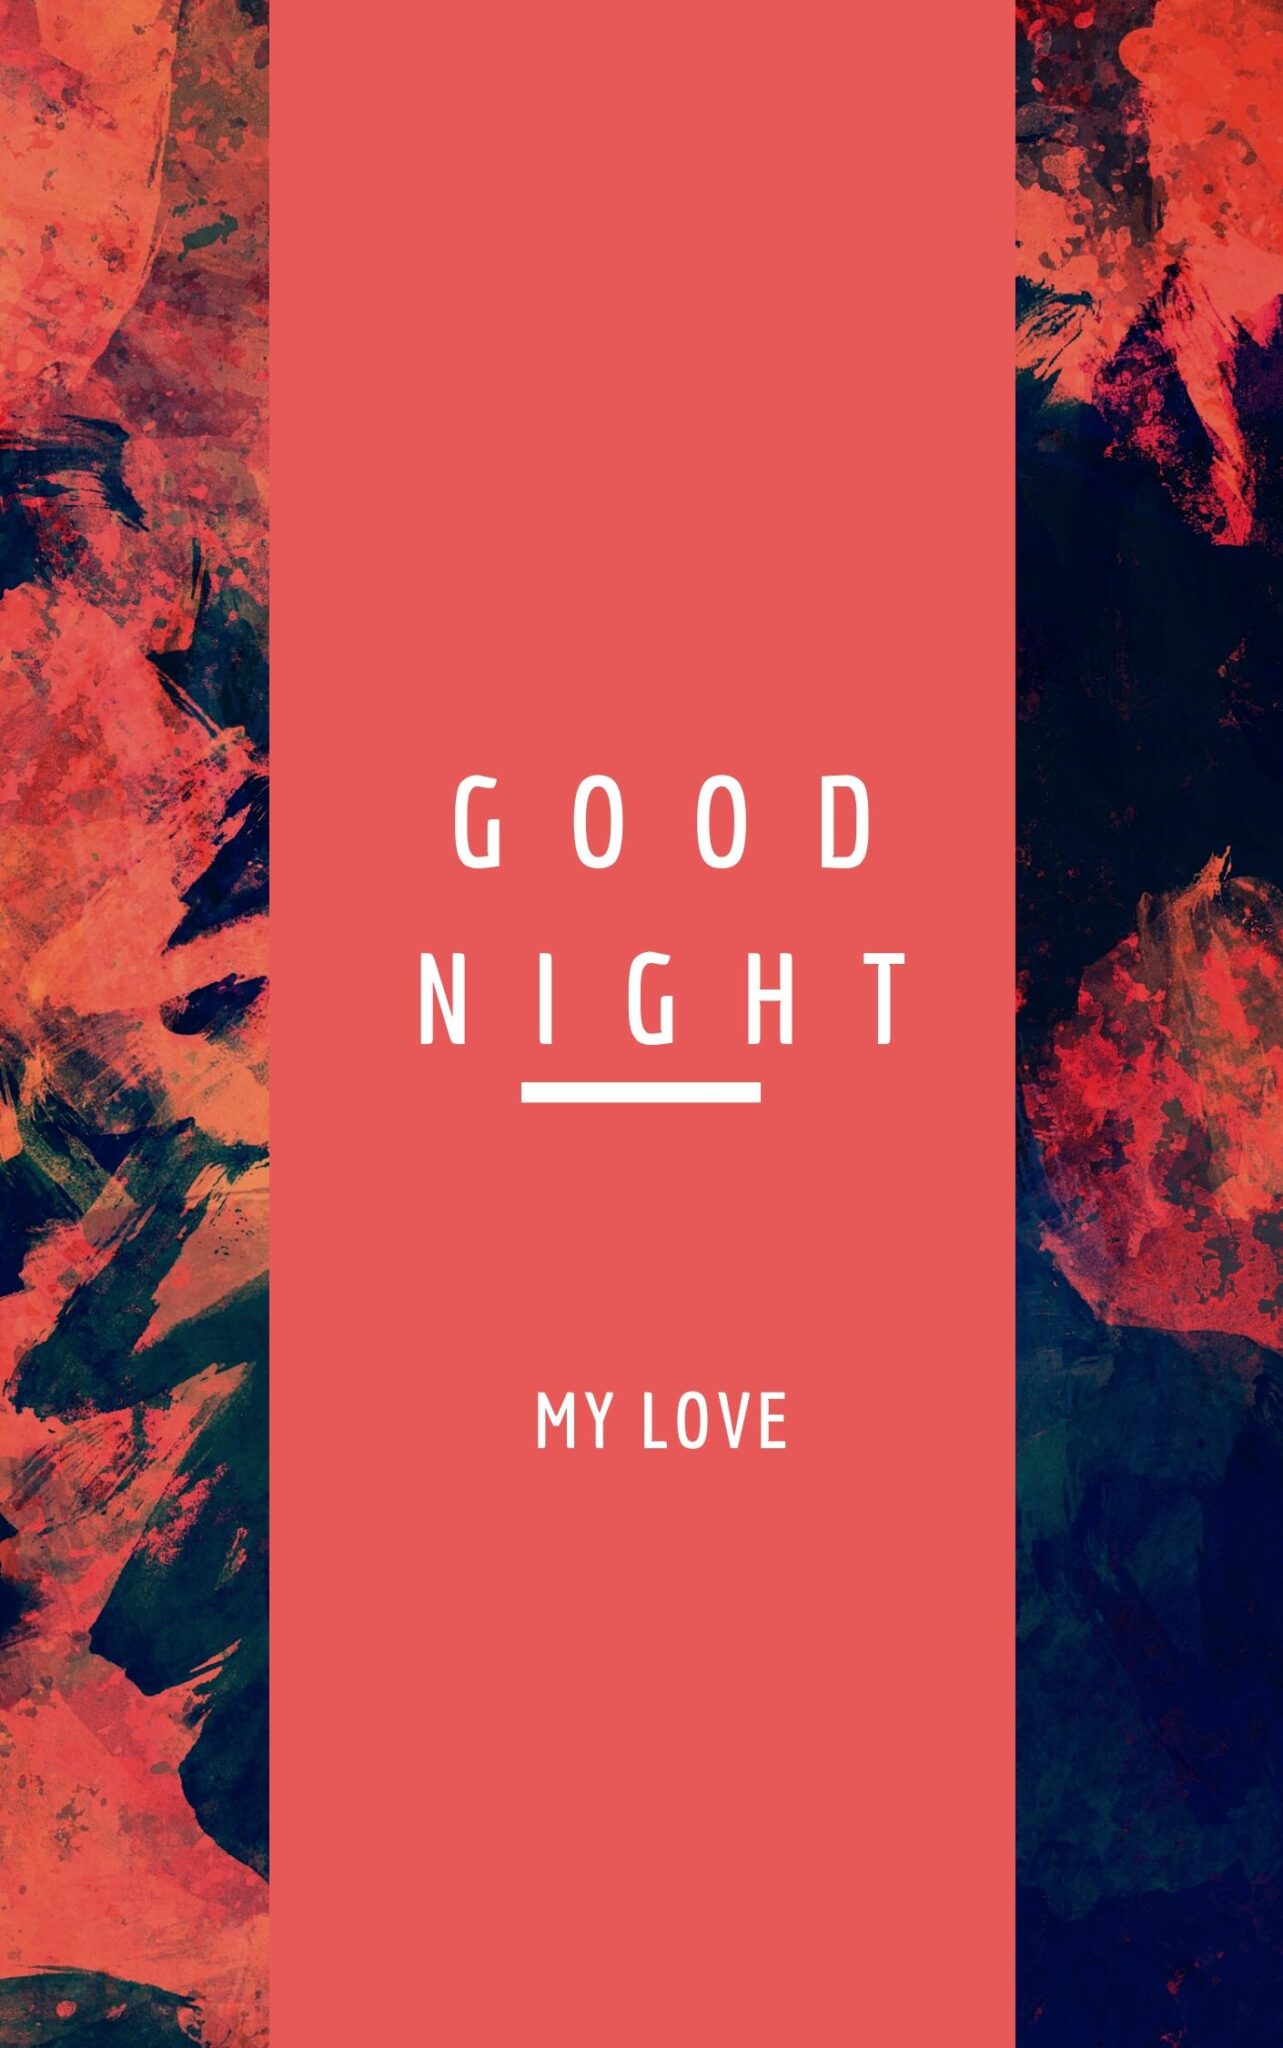 Good Night My Love Image hd